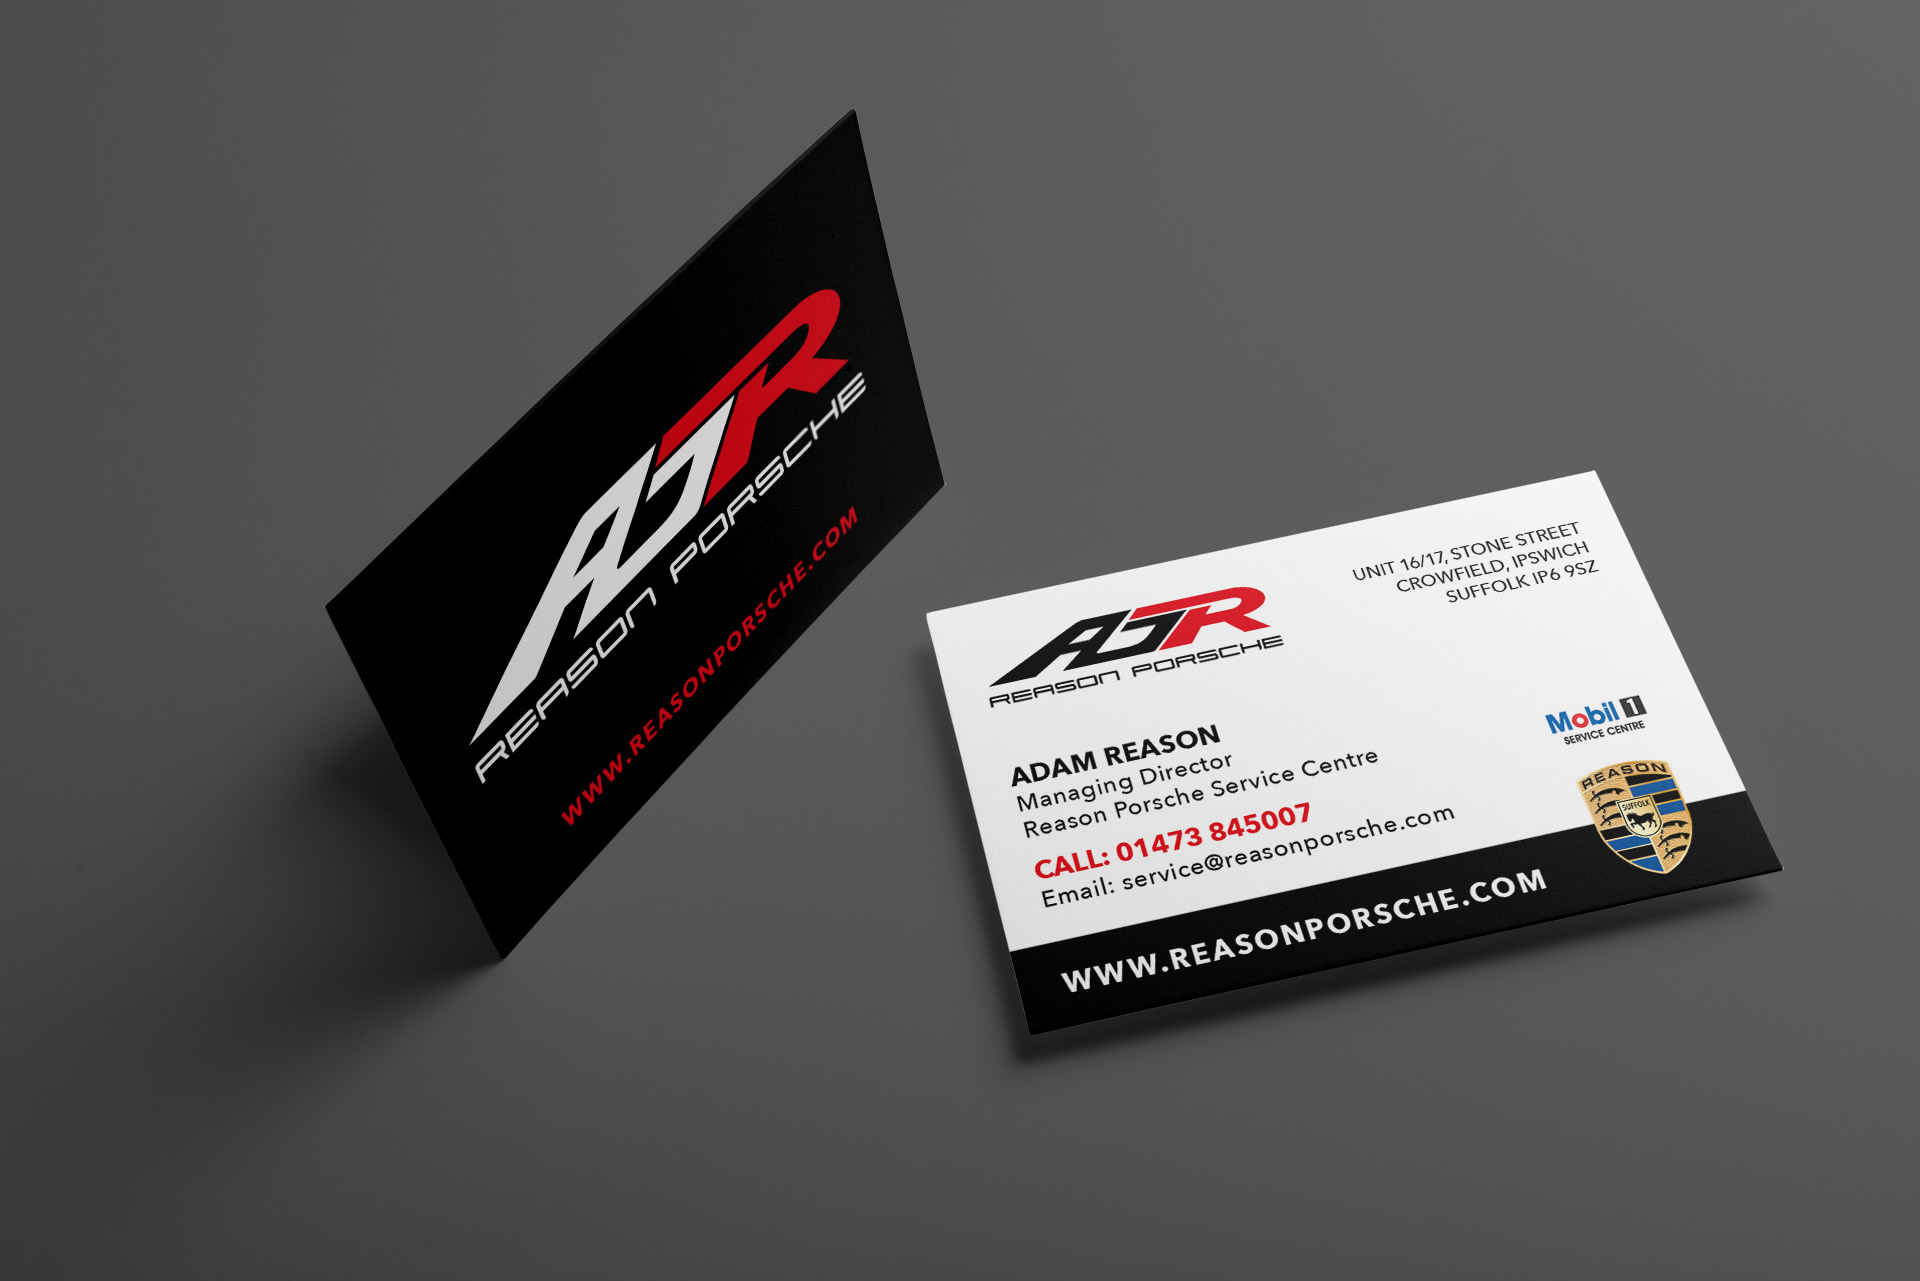 Reason Porsche Business card design and print